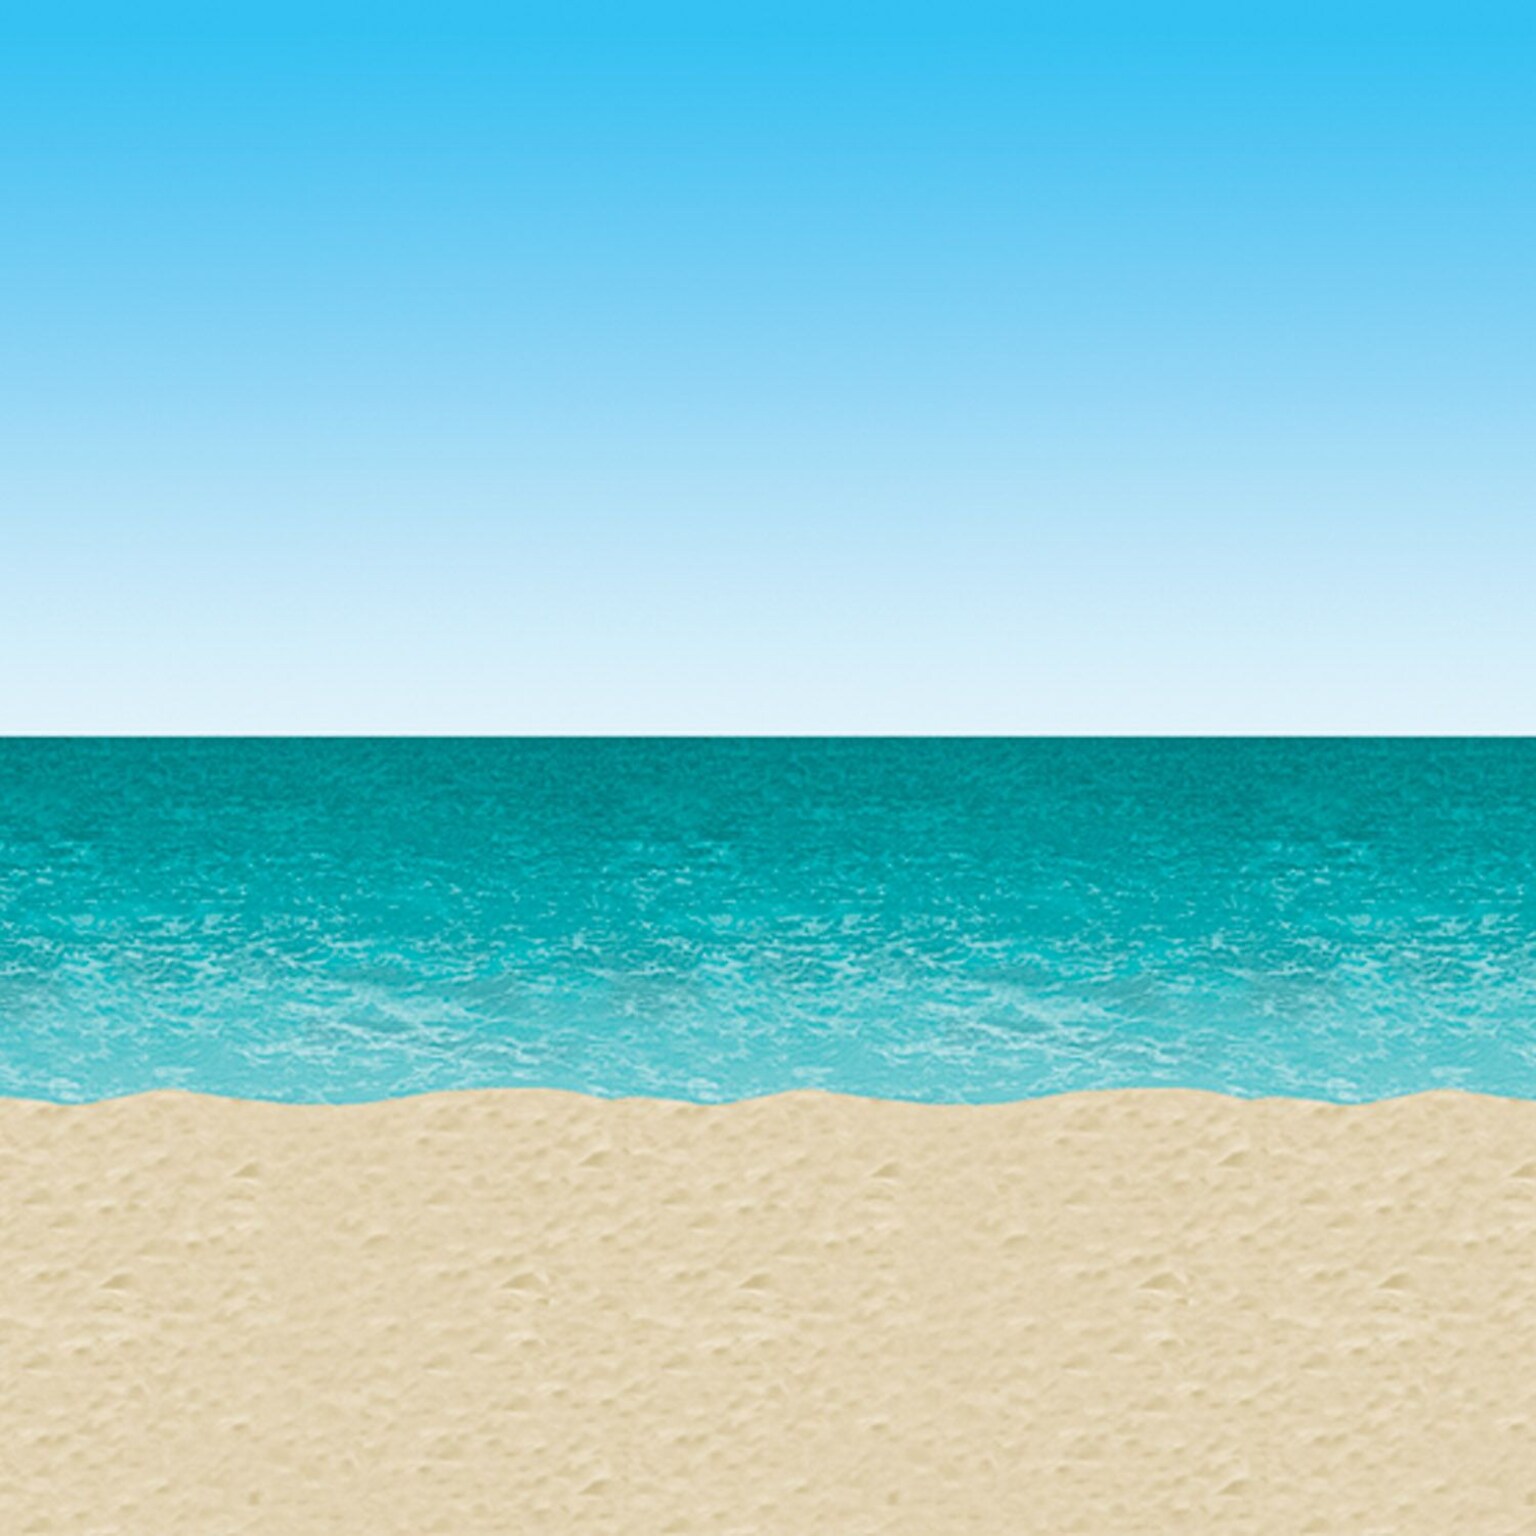 Beistle Ocean and Beach Backdrop (52001)